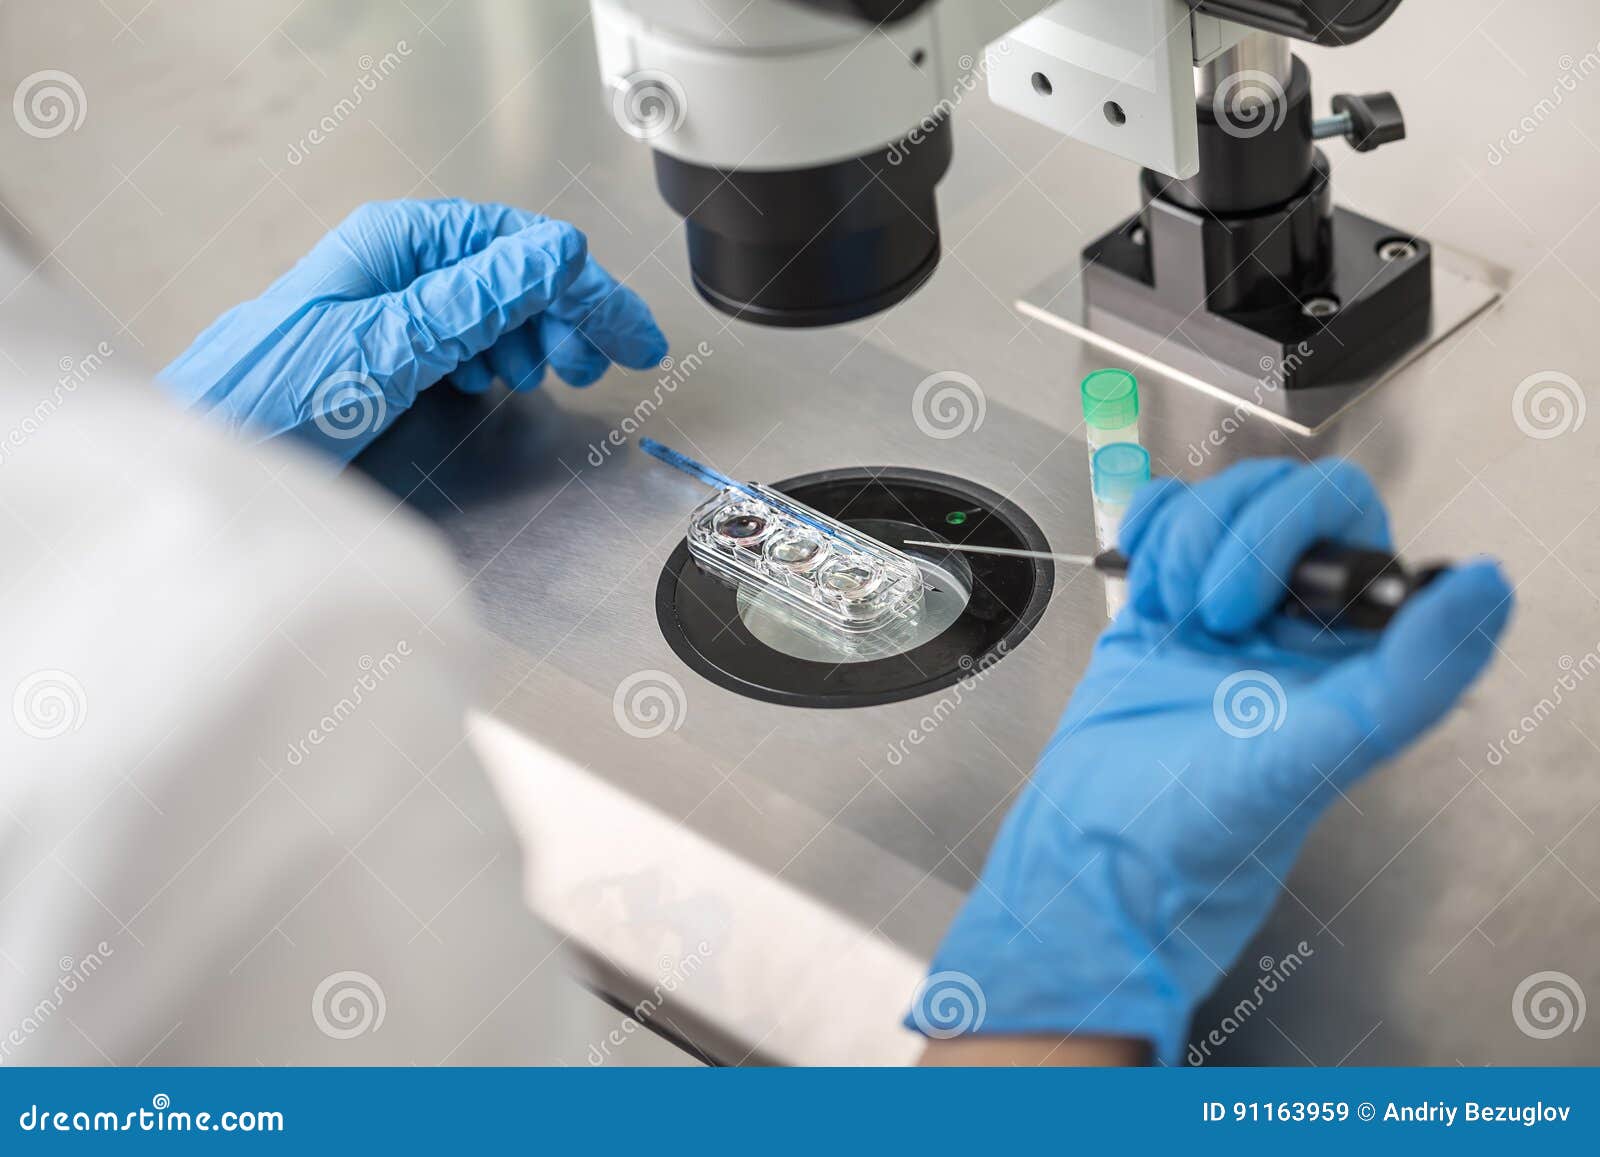 checking result of in vitro fertilization